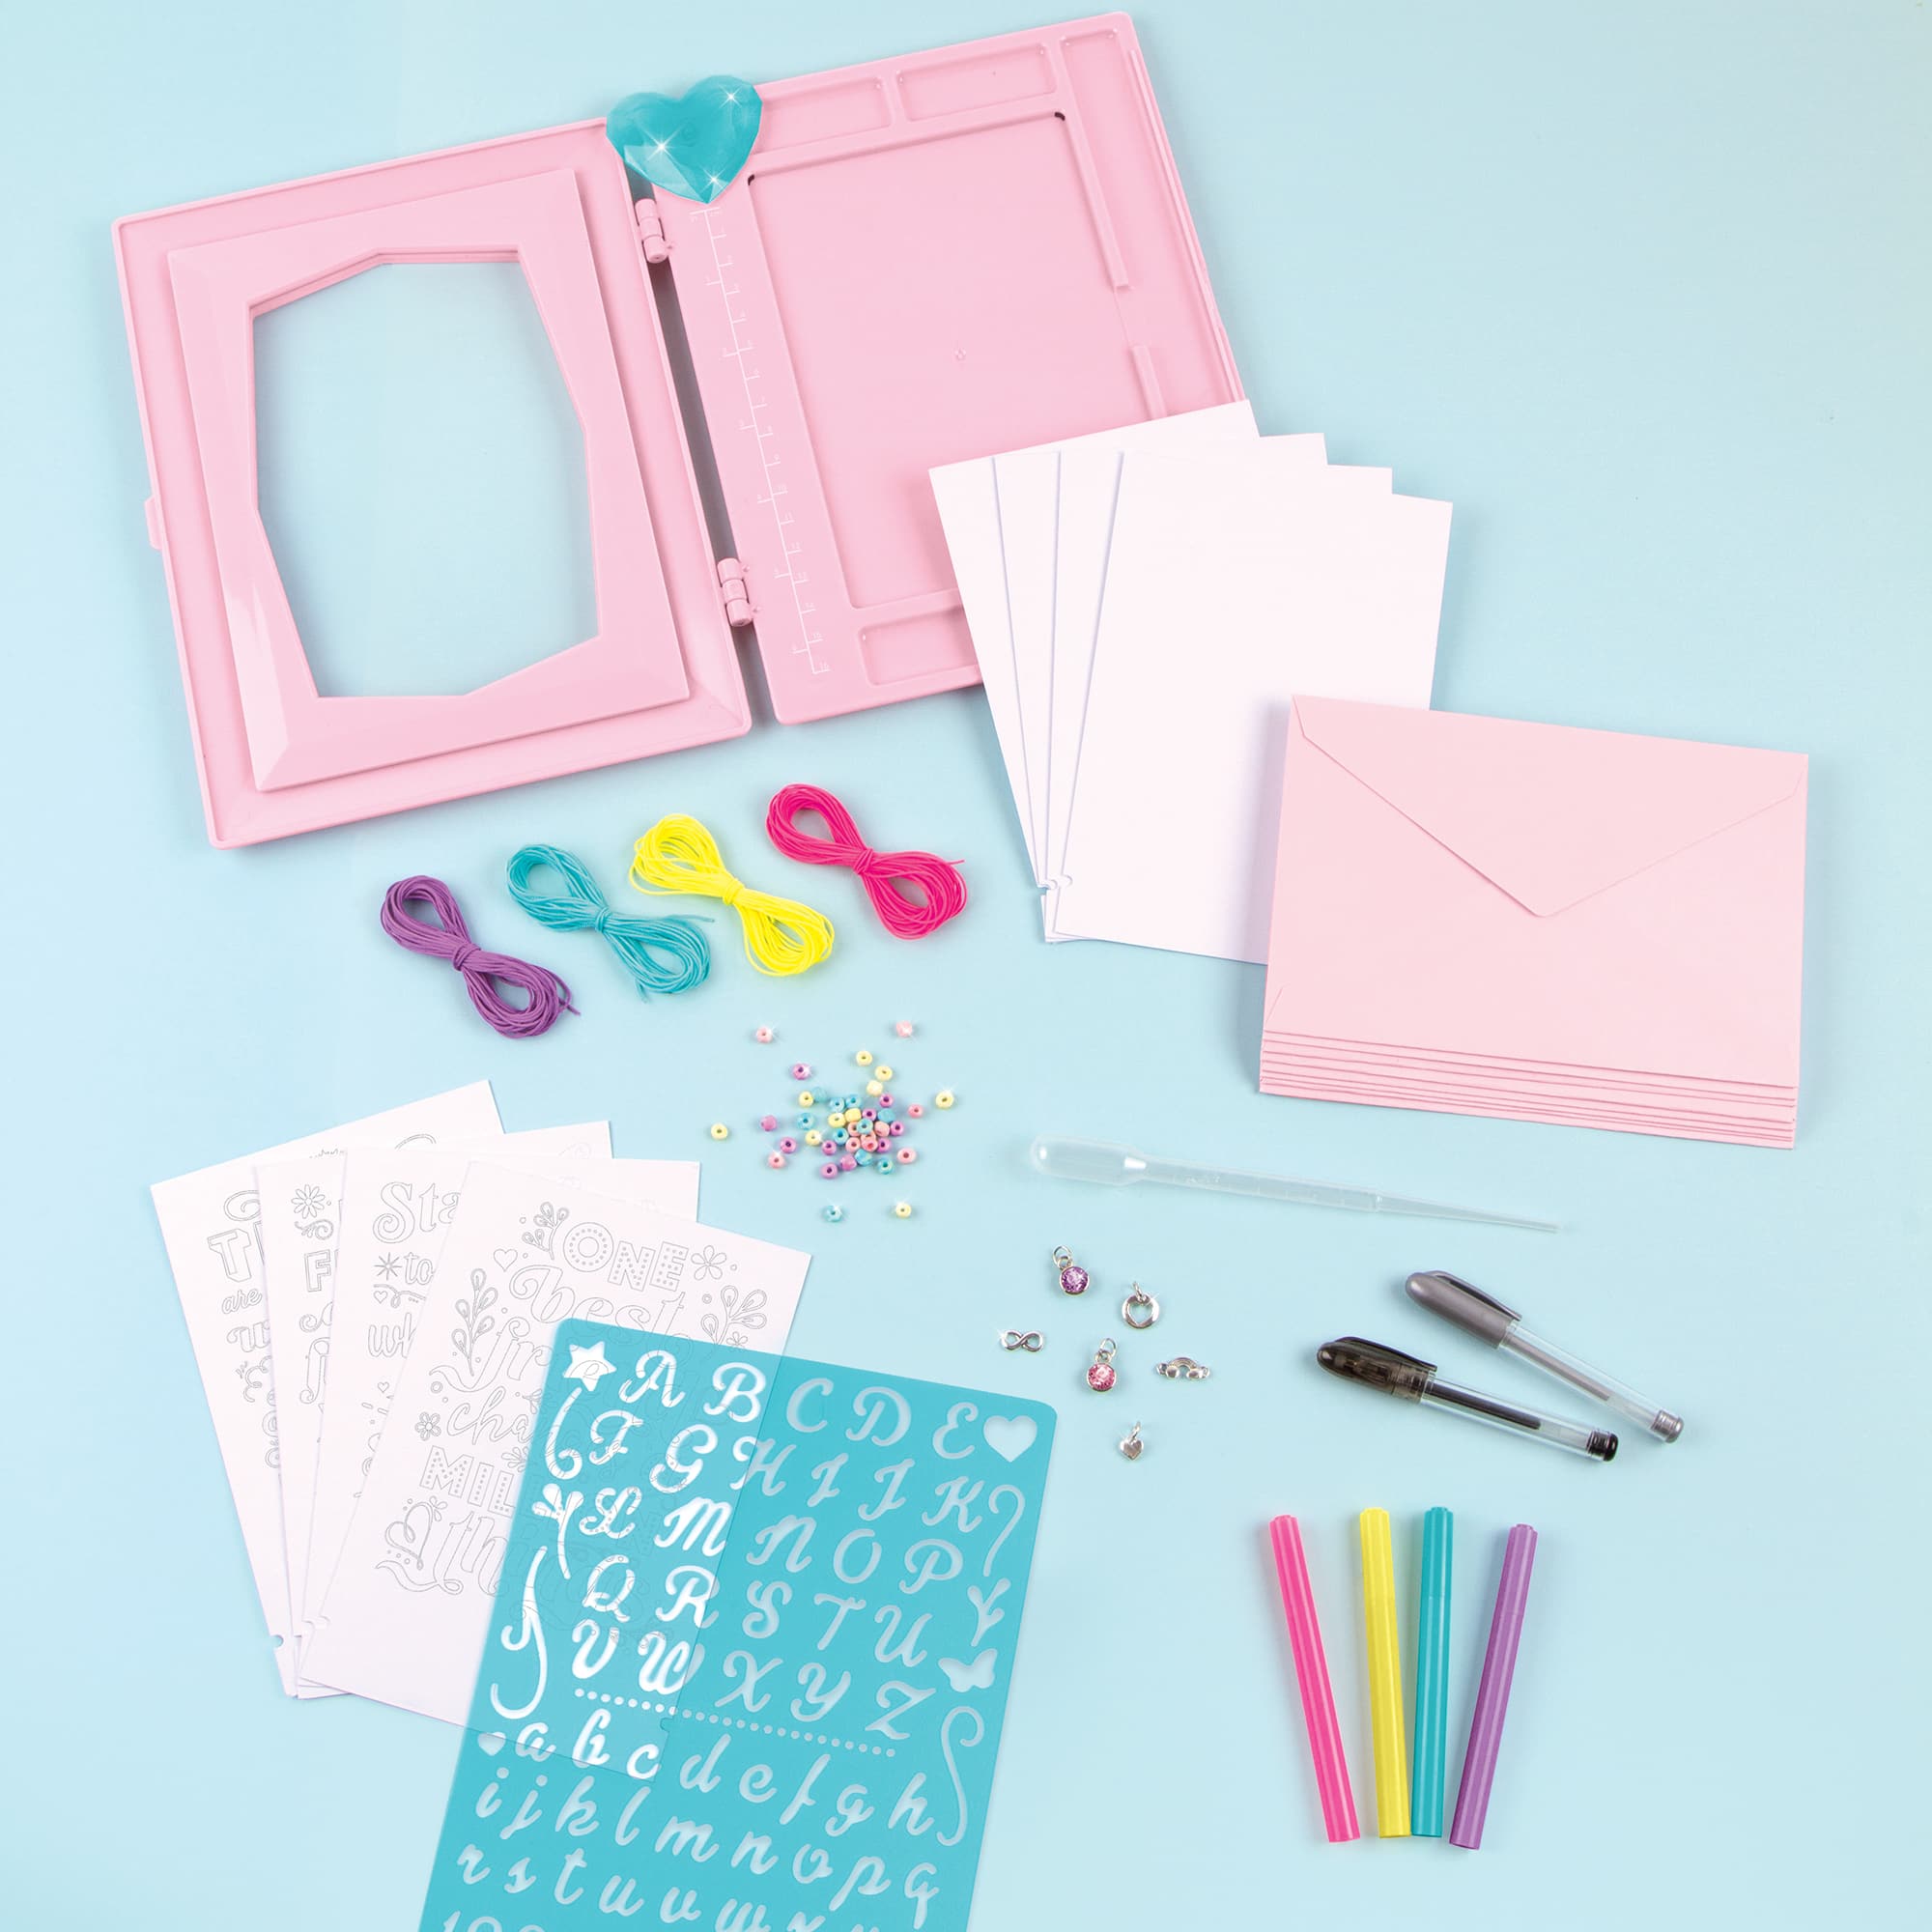 Make It Real DIY Jewelry &#x26; Art Gift Station Activity Kit